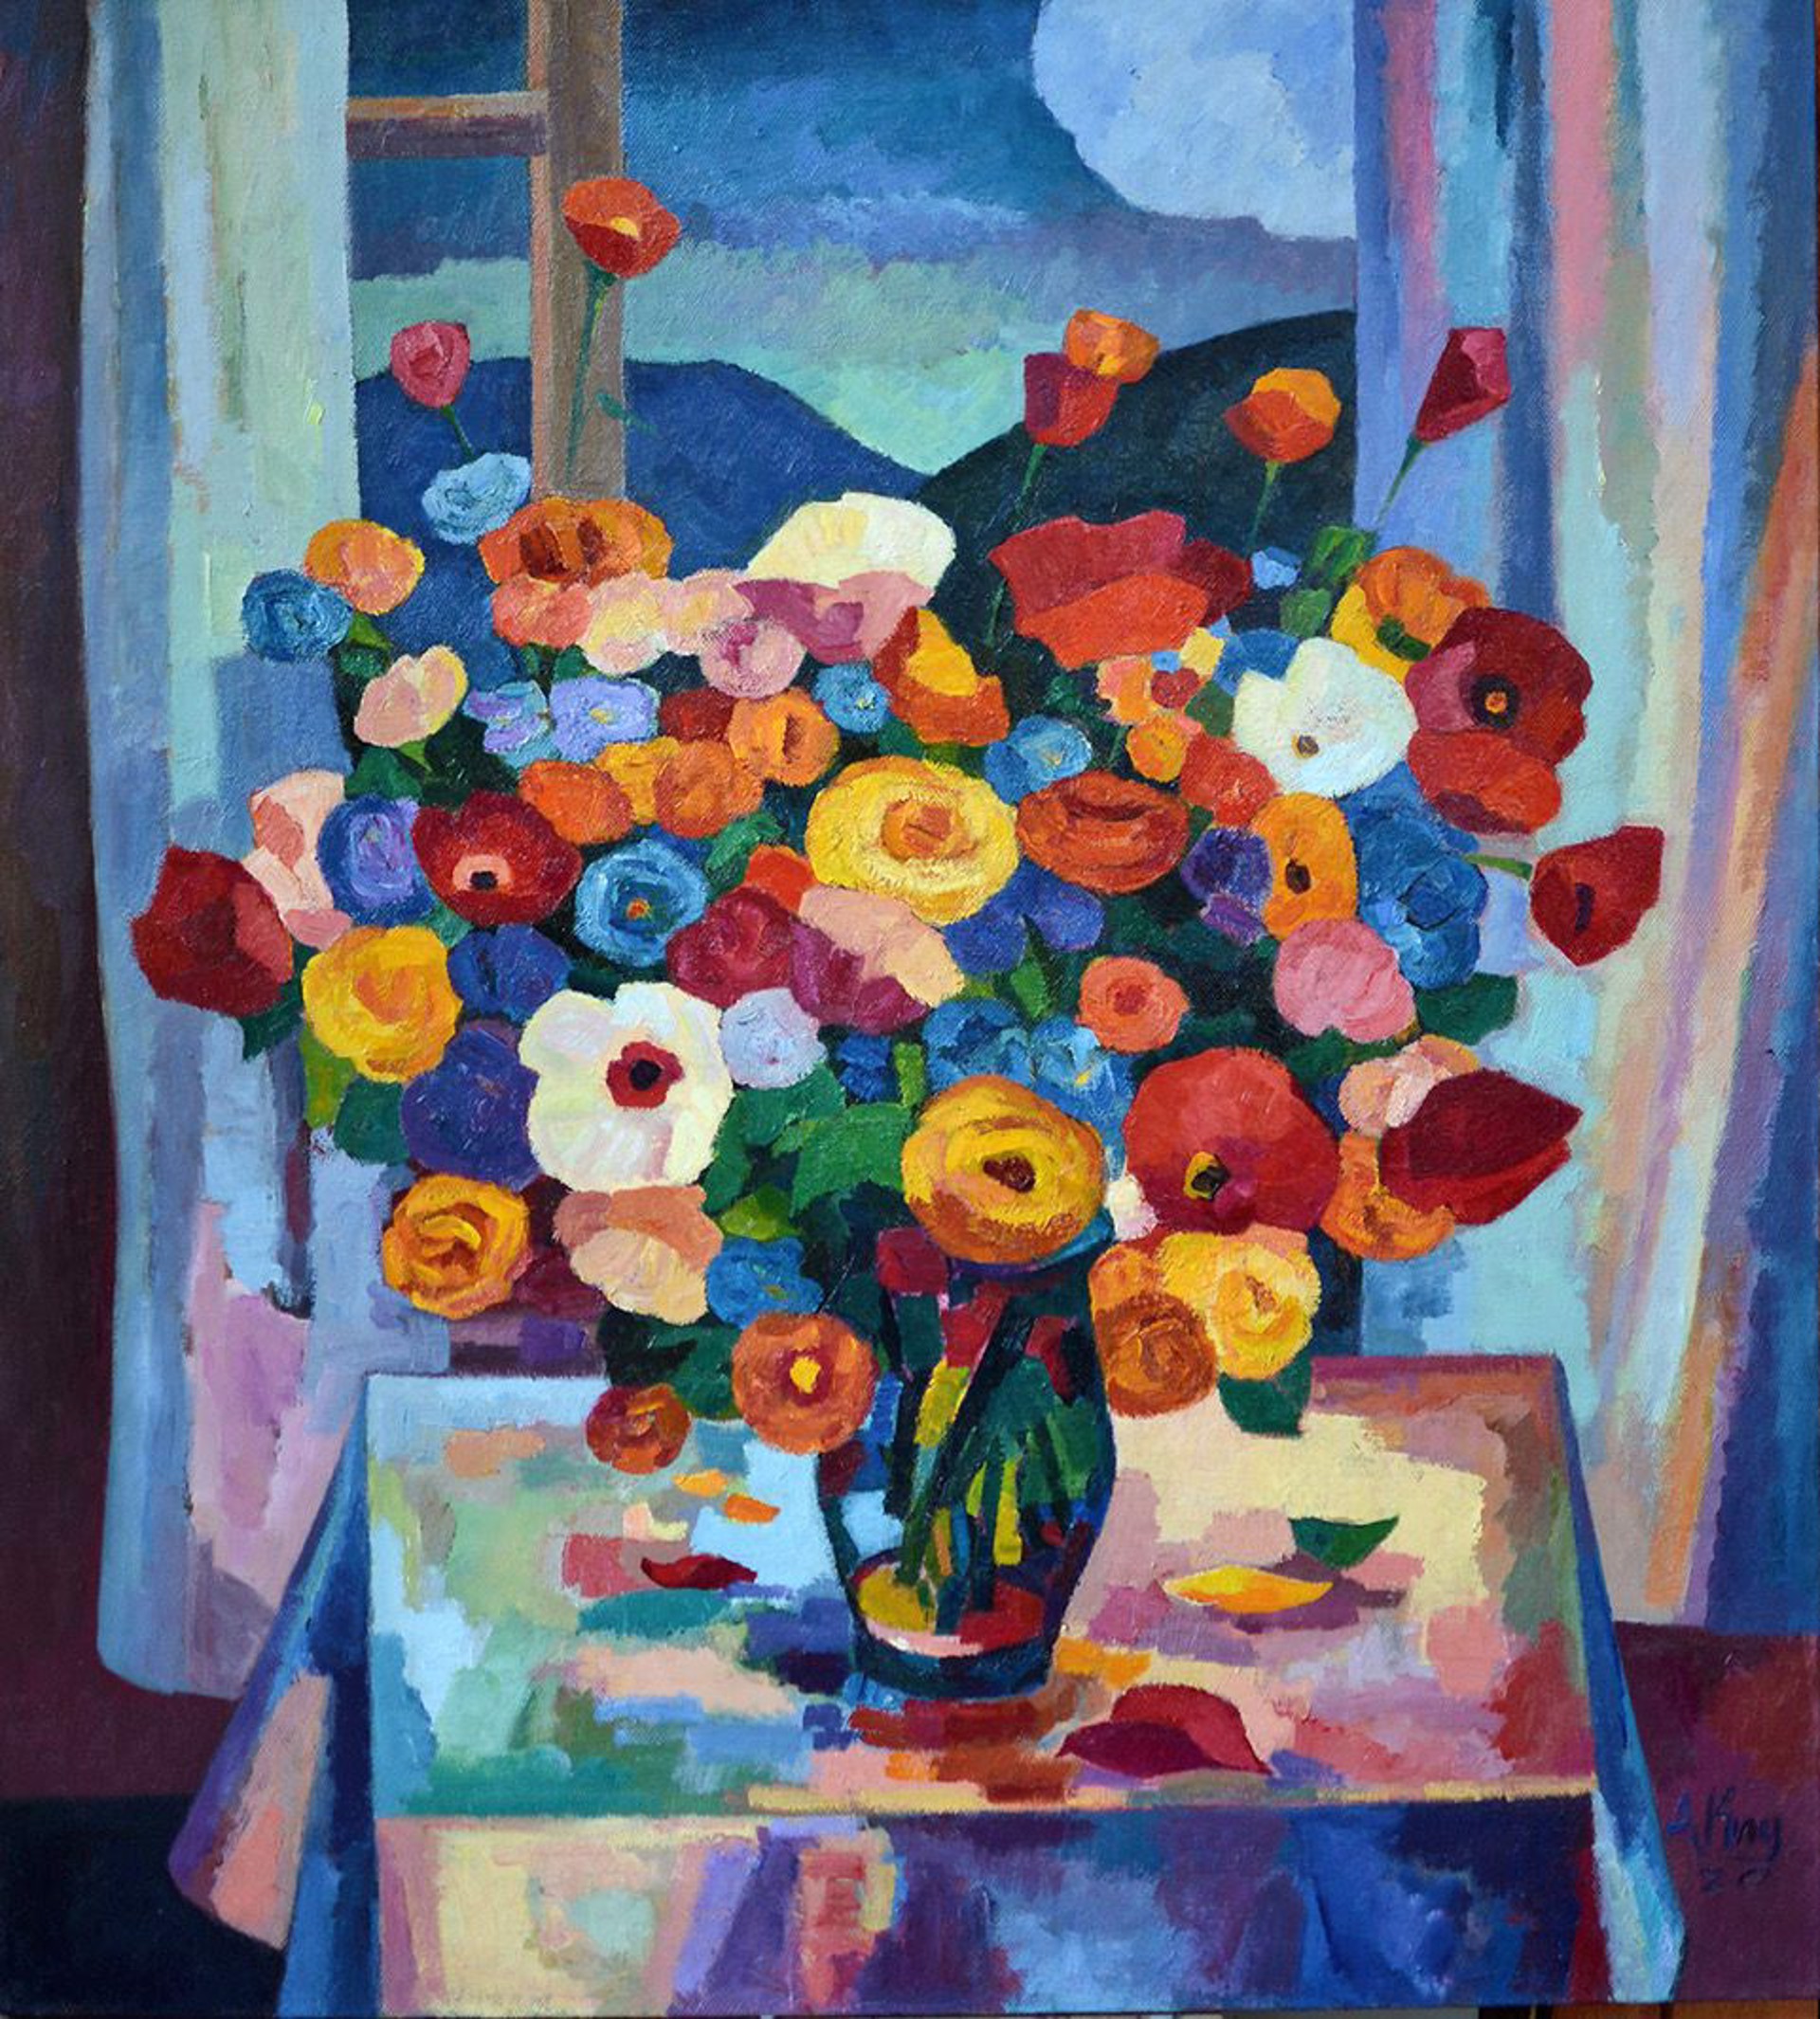 A Large Bouquet by Andrei Kioresku